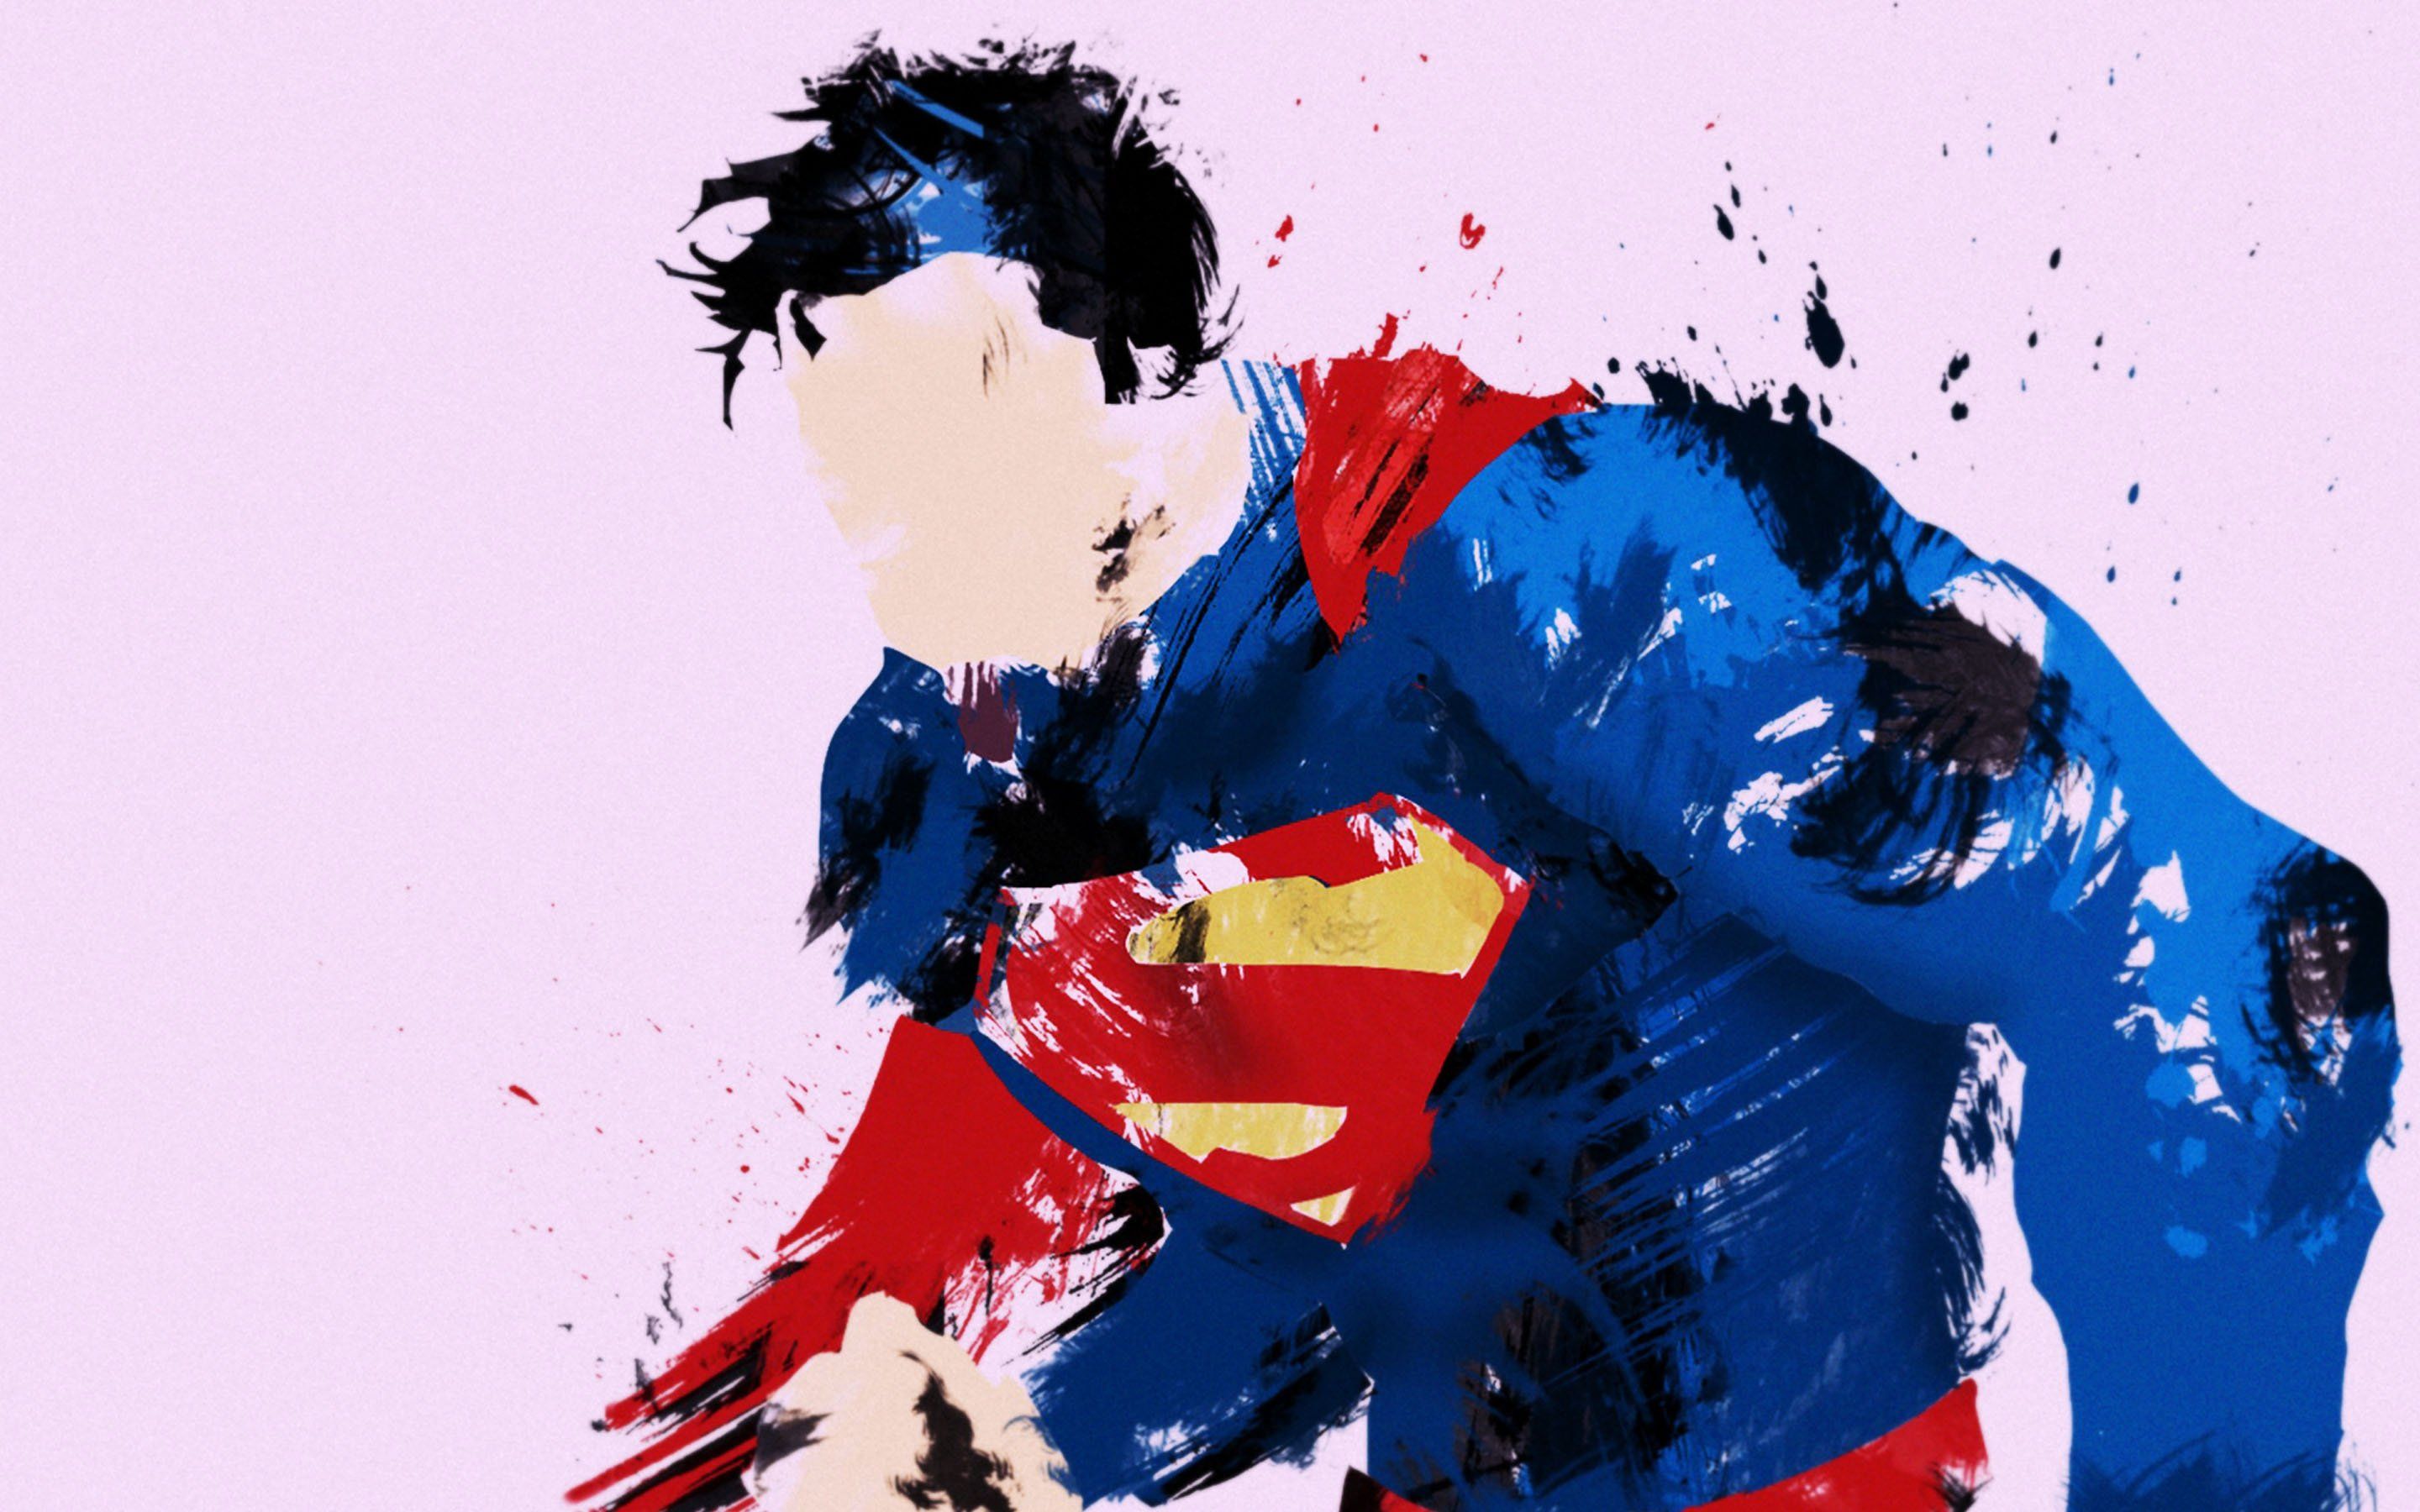 Marvel Superhero Digital Art Wallpapers